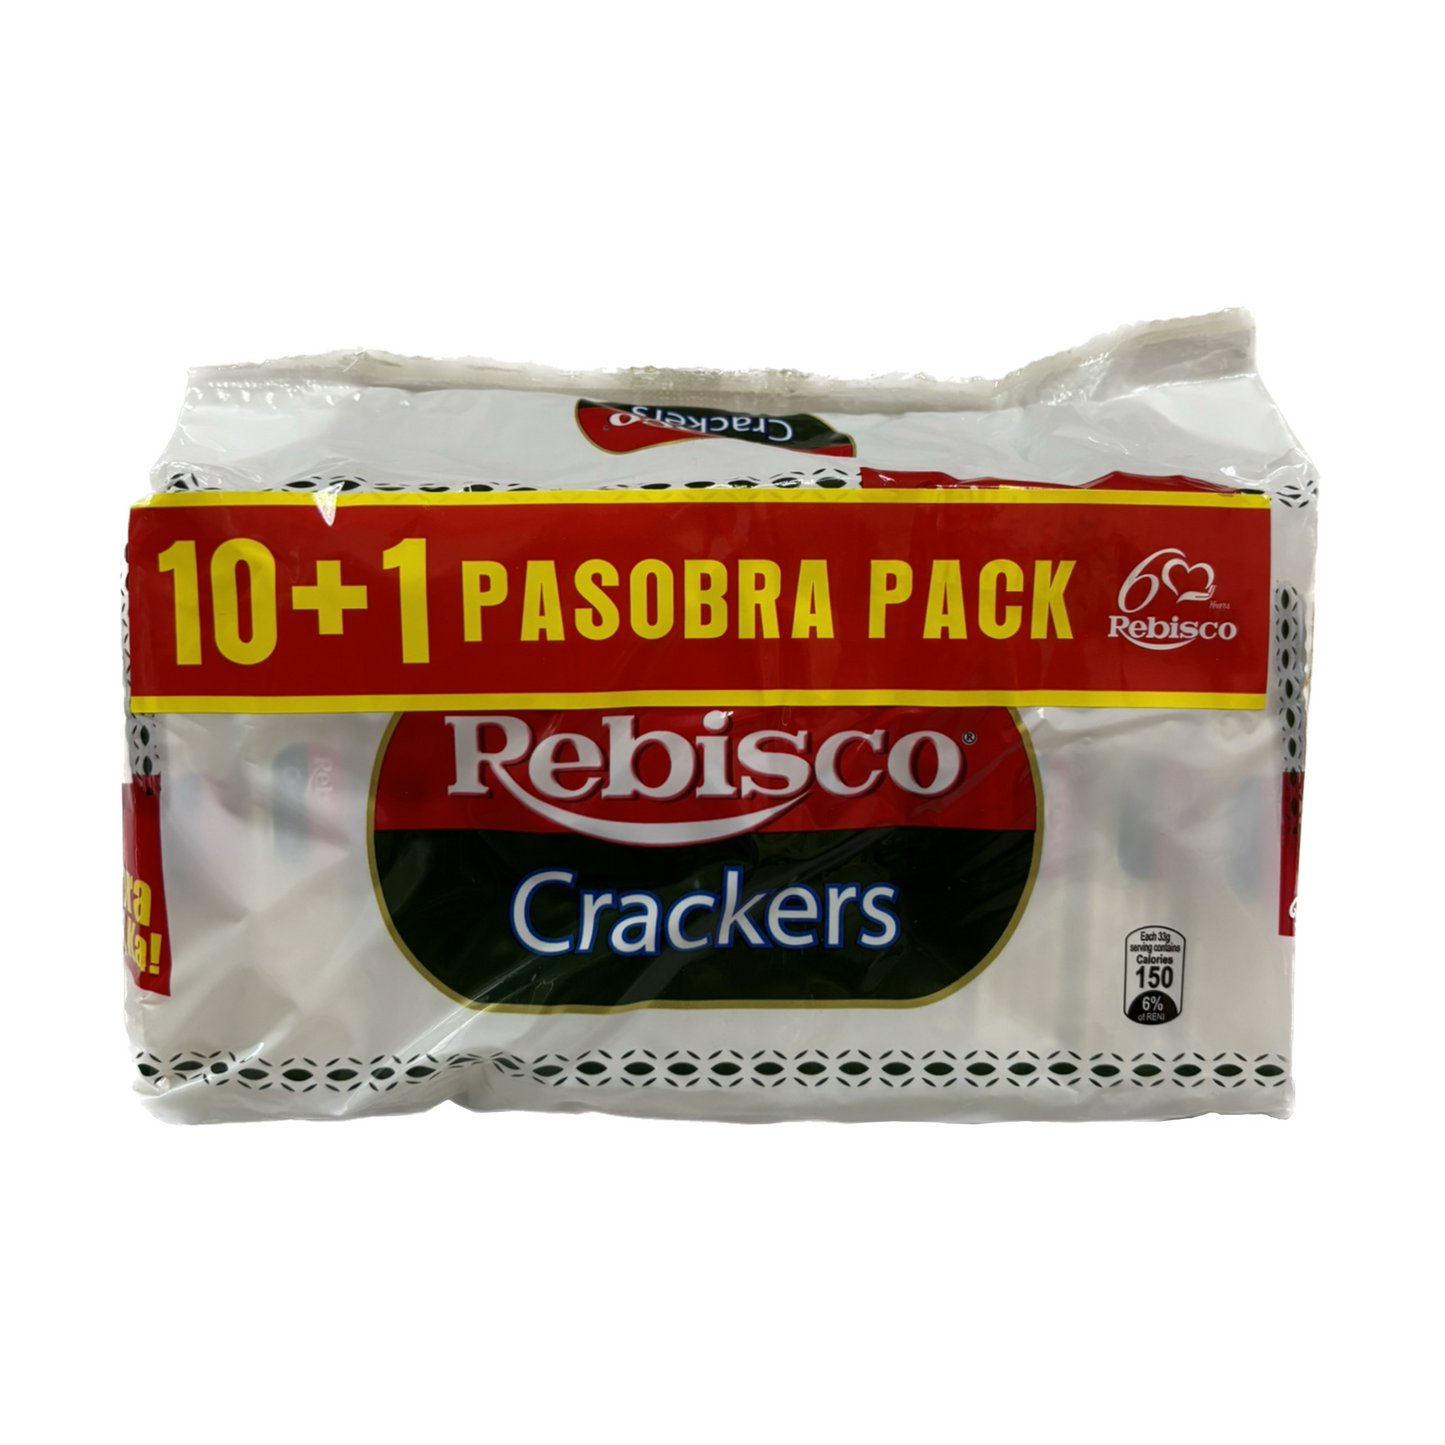 Rebisco Crackers (33g x 10 + 1 packs)